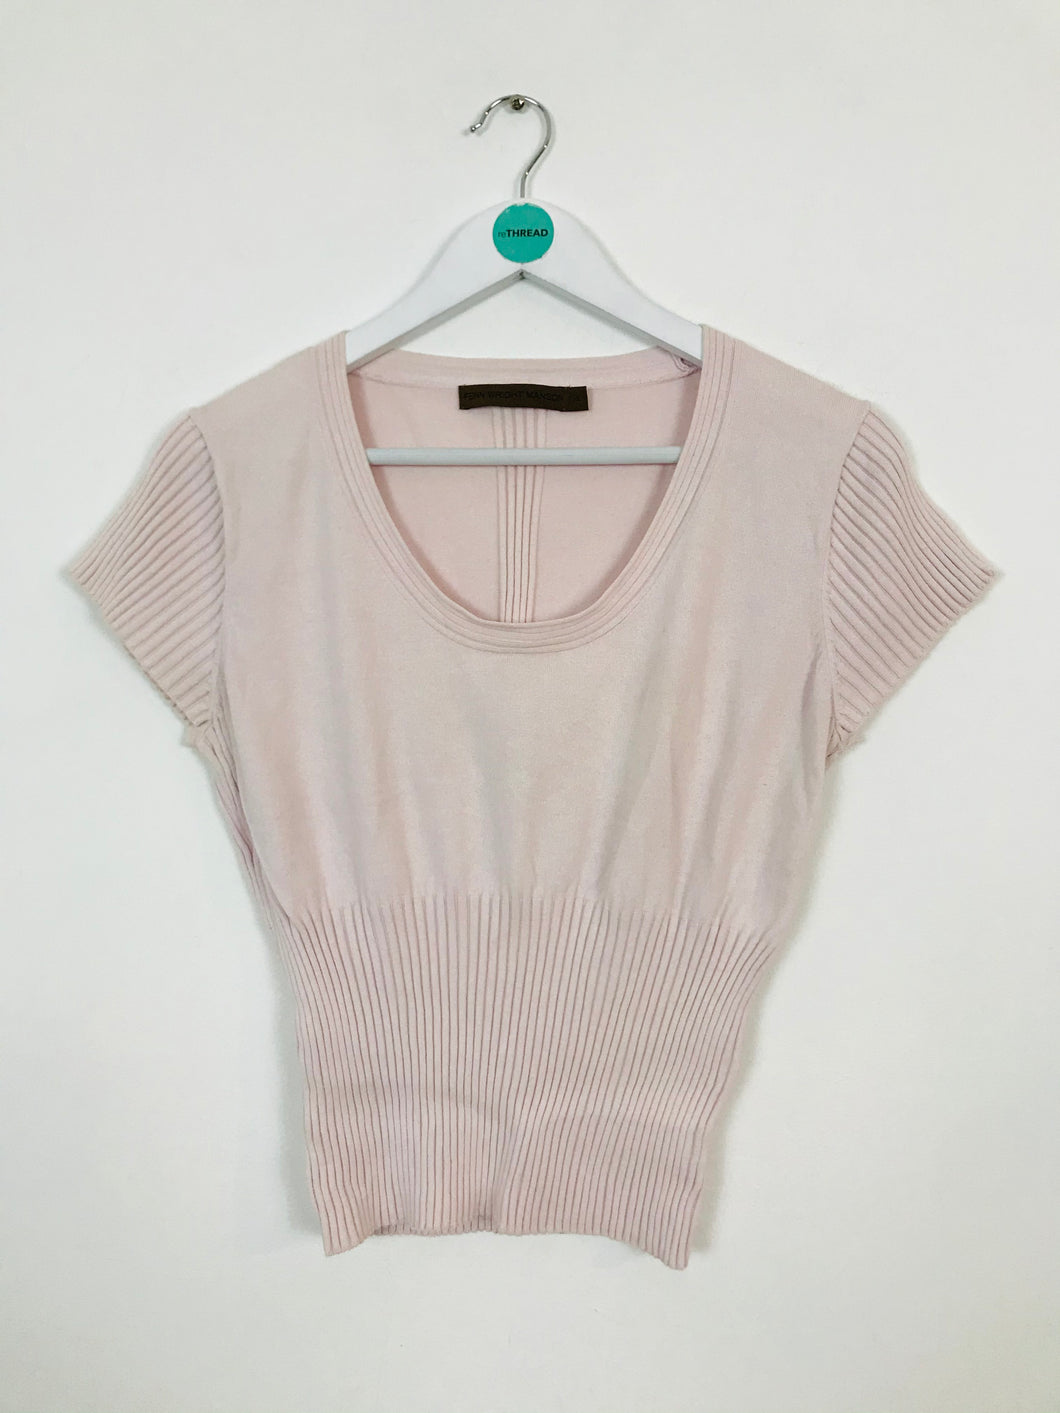 Fenn Wright Manson Women’s Shirt Sleeve Knitted Top | UK 16-18 | Pink